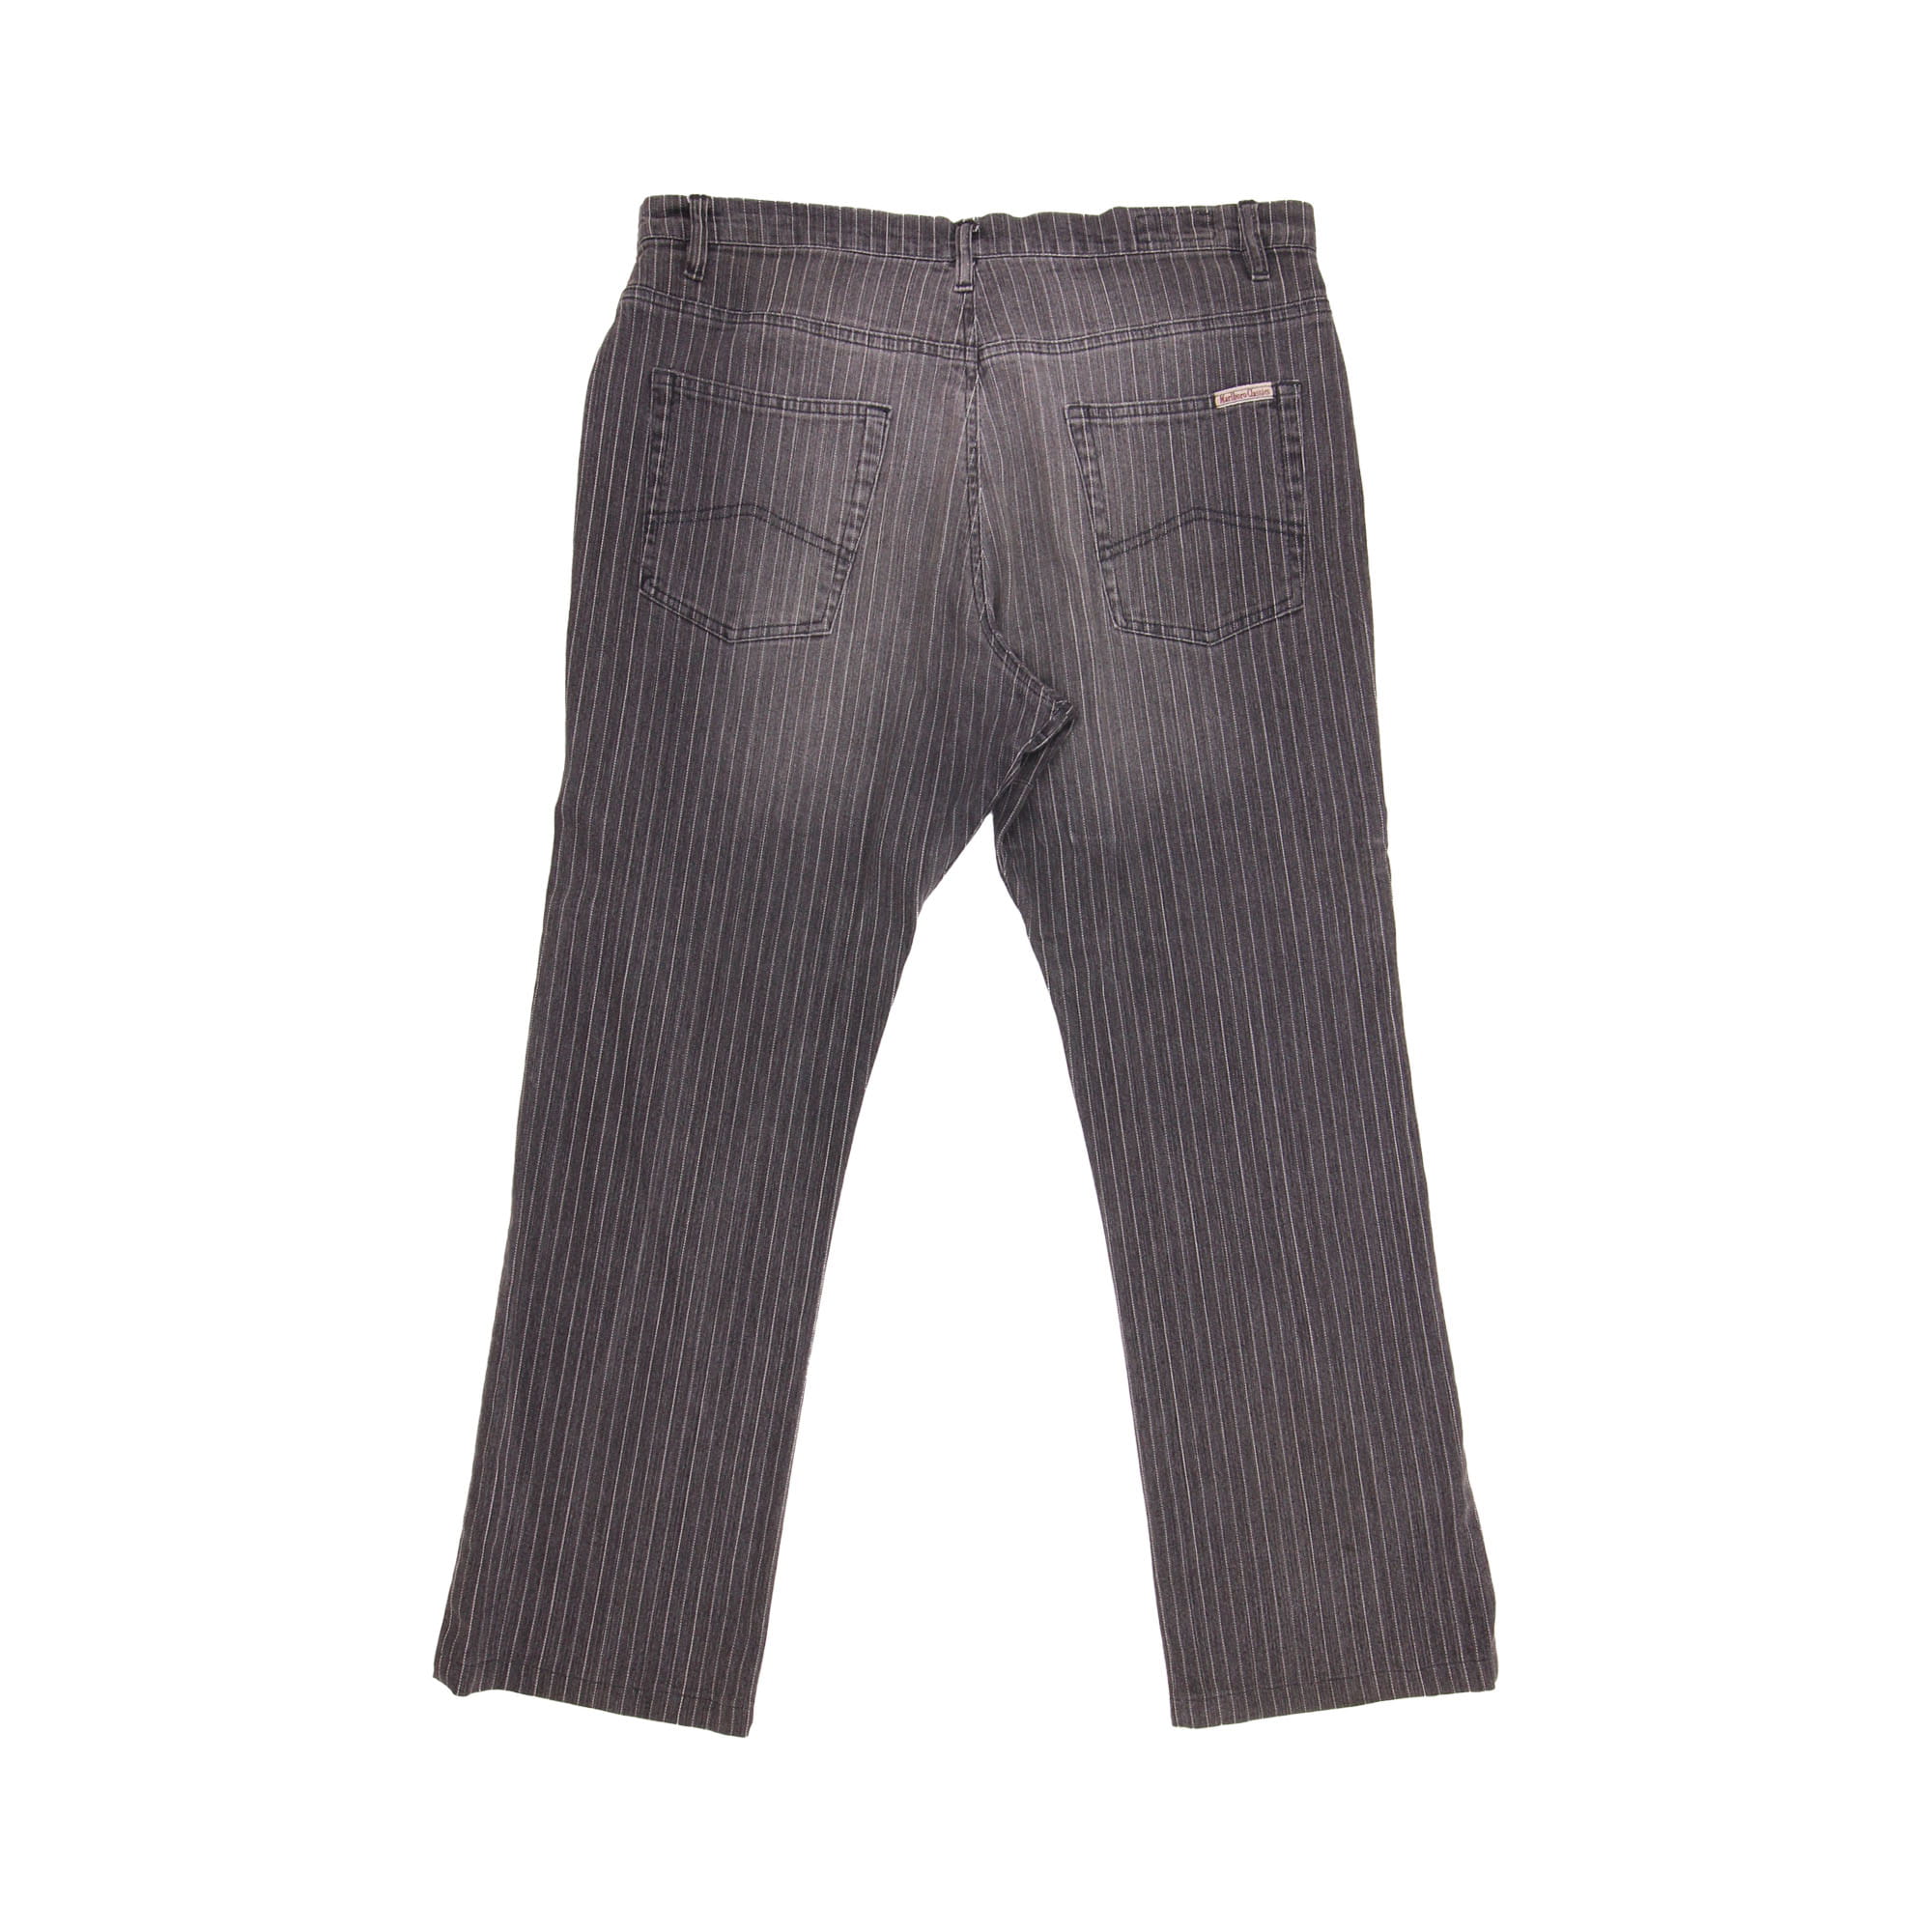 Marlboro Classics Jeans Grey -  L/XL